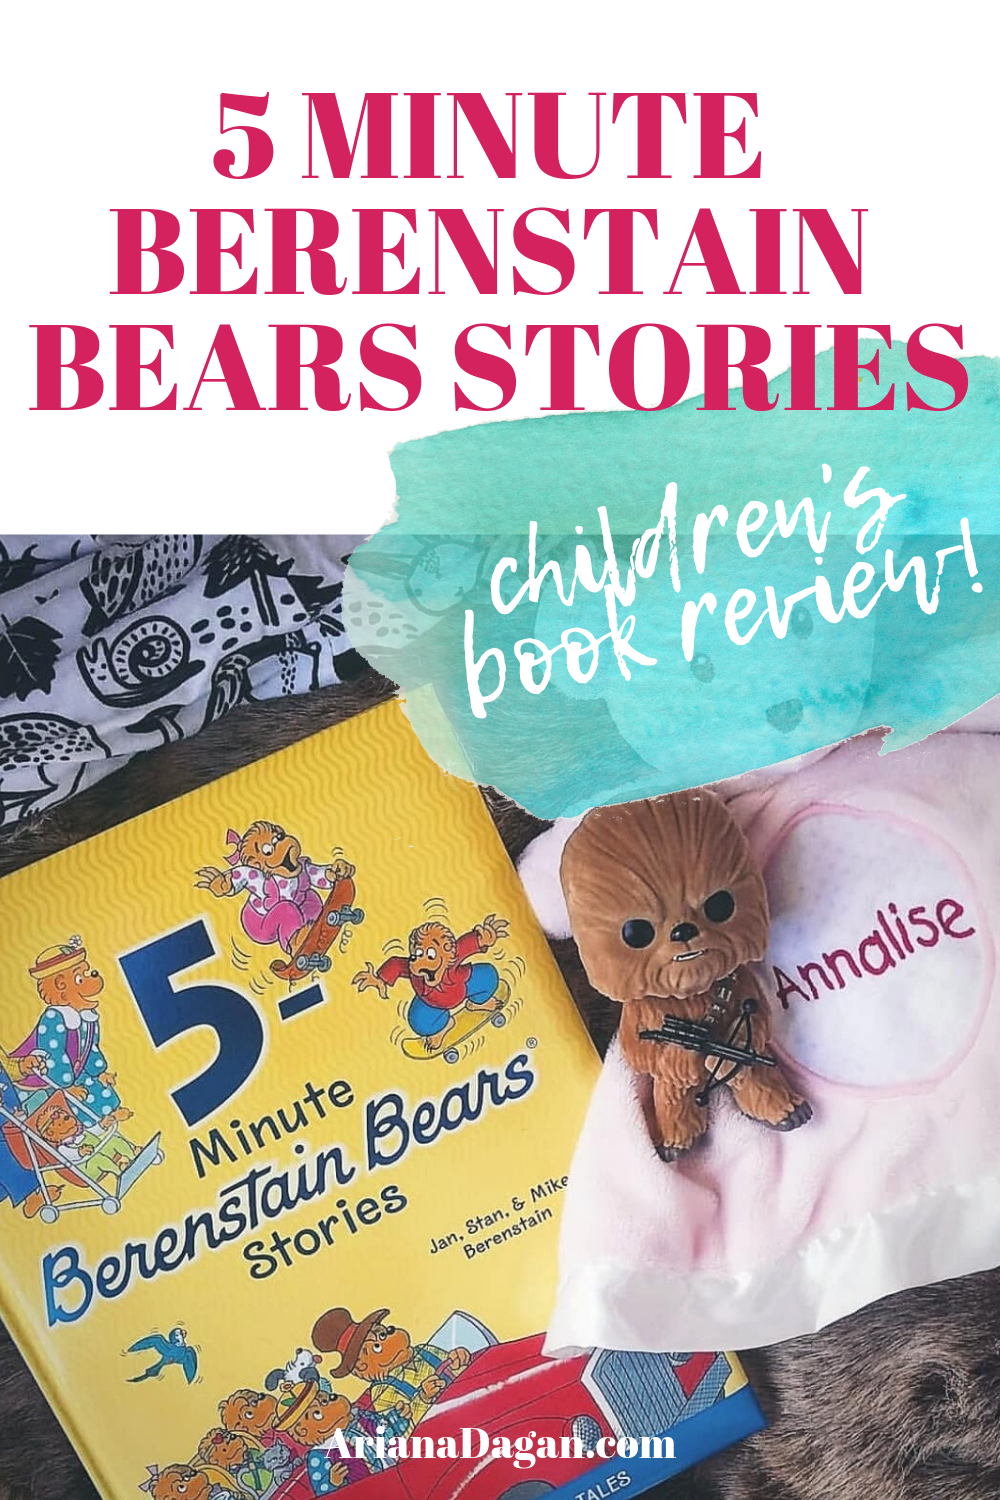 5 Minute Berenstain Bears Stories Children's Book Reviews by Ariana Dagan